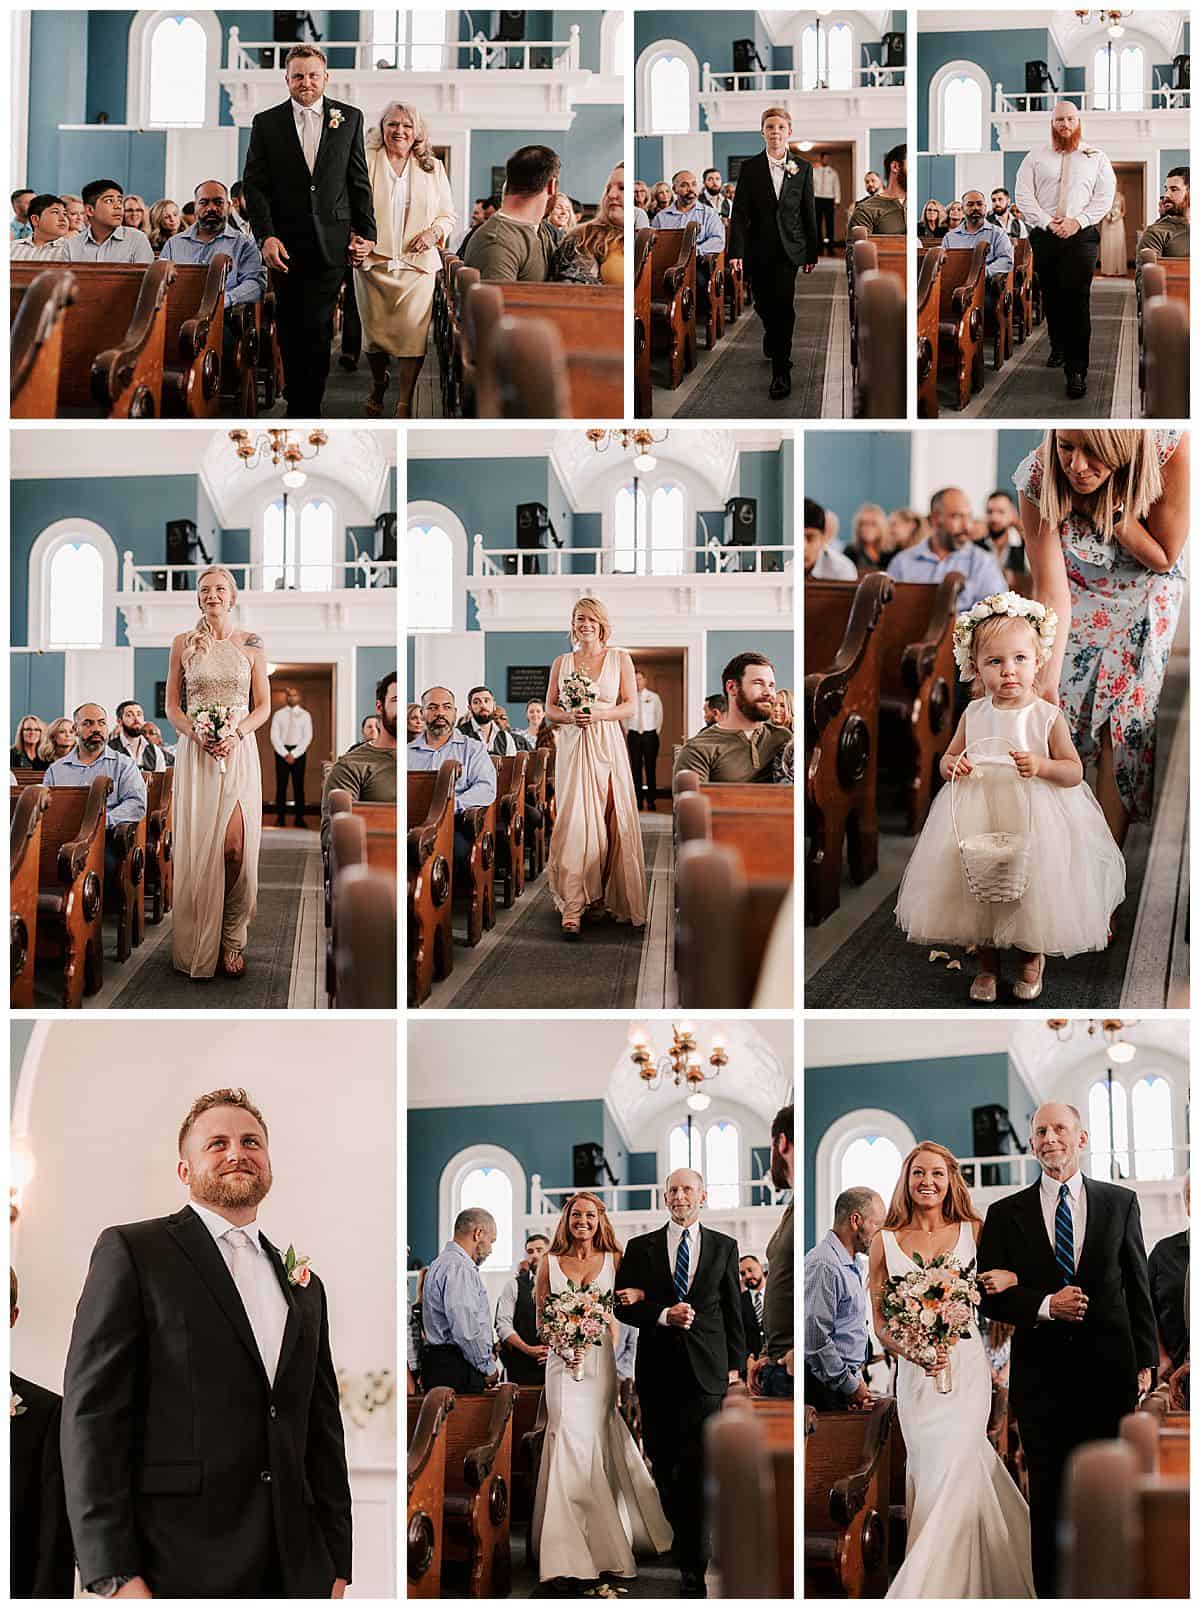 Port Gamble wedding photos at St Paul's church by Luma Weddings